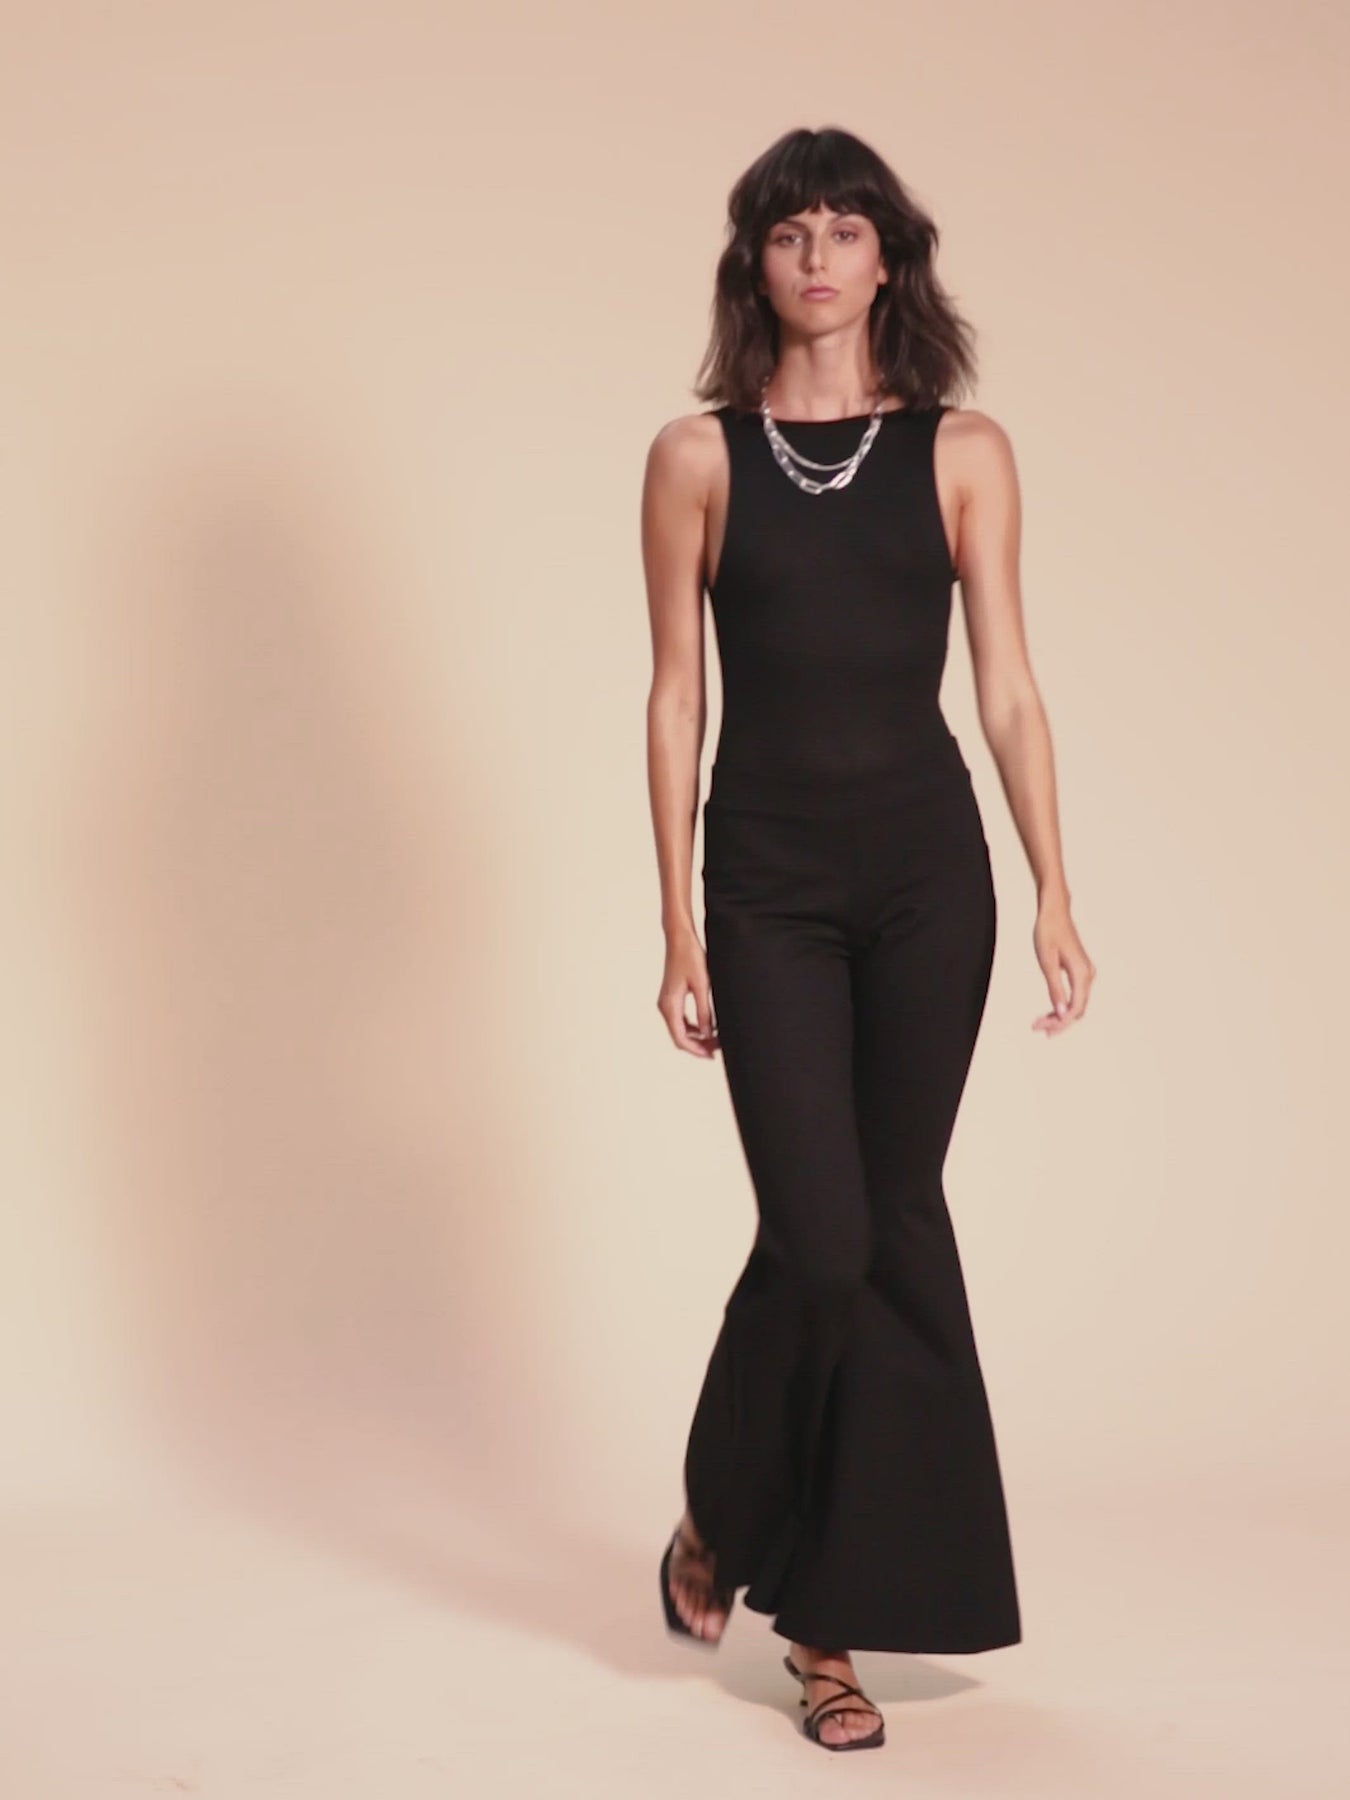 Shop Whitney Black Sleeveless Open Back Tencel Bodysuit – SHE IS REBEL GmbH